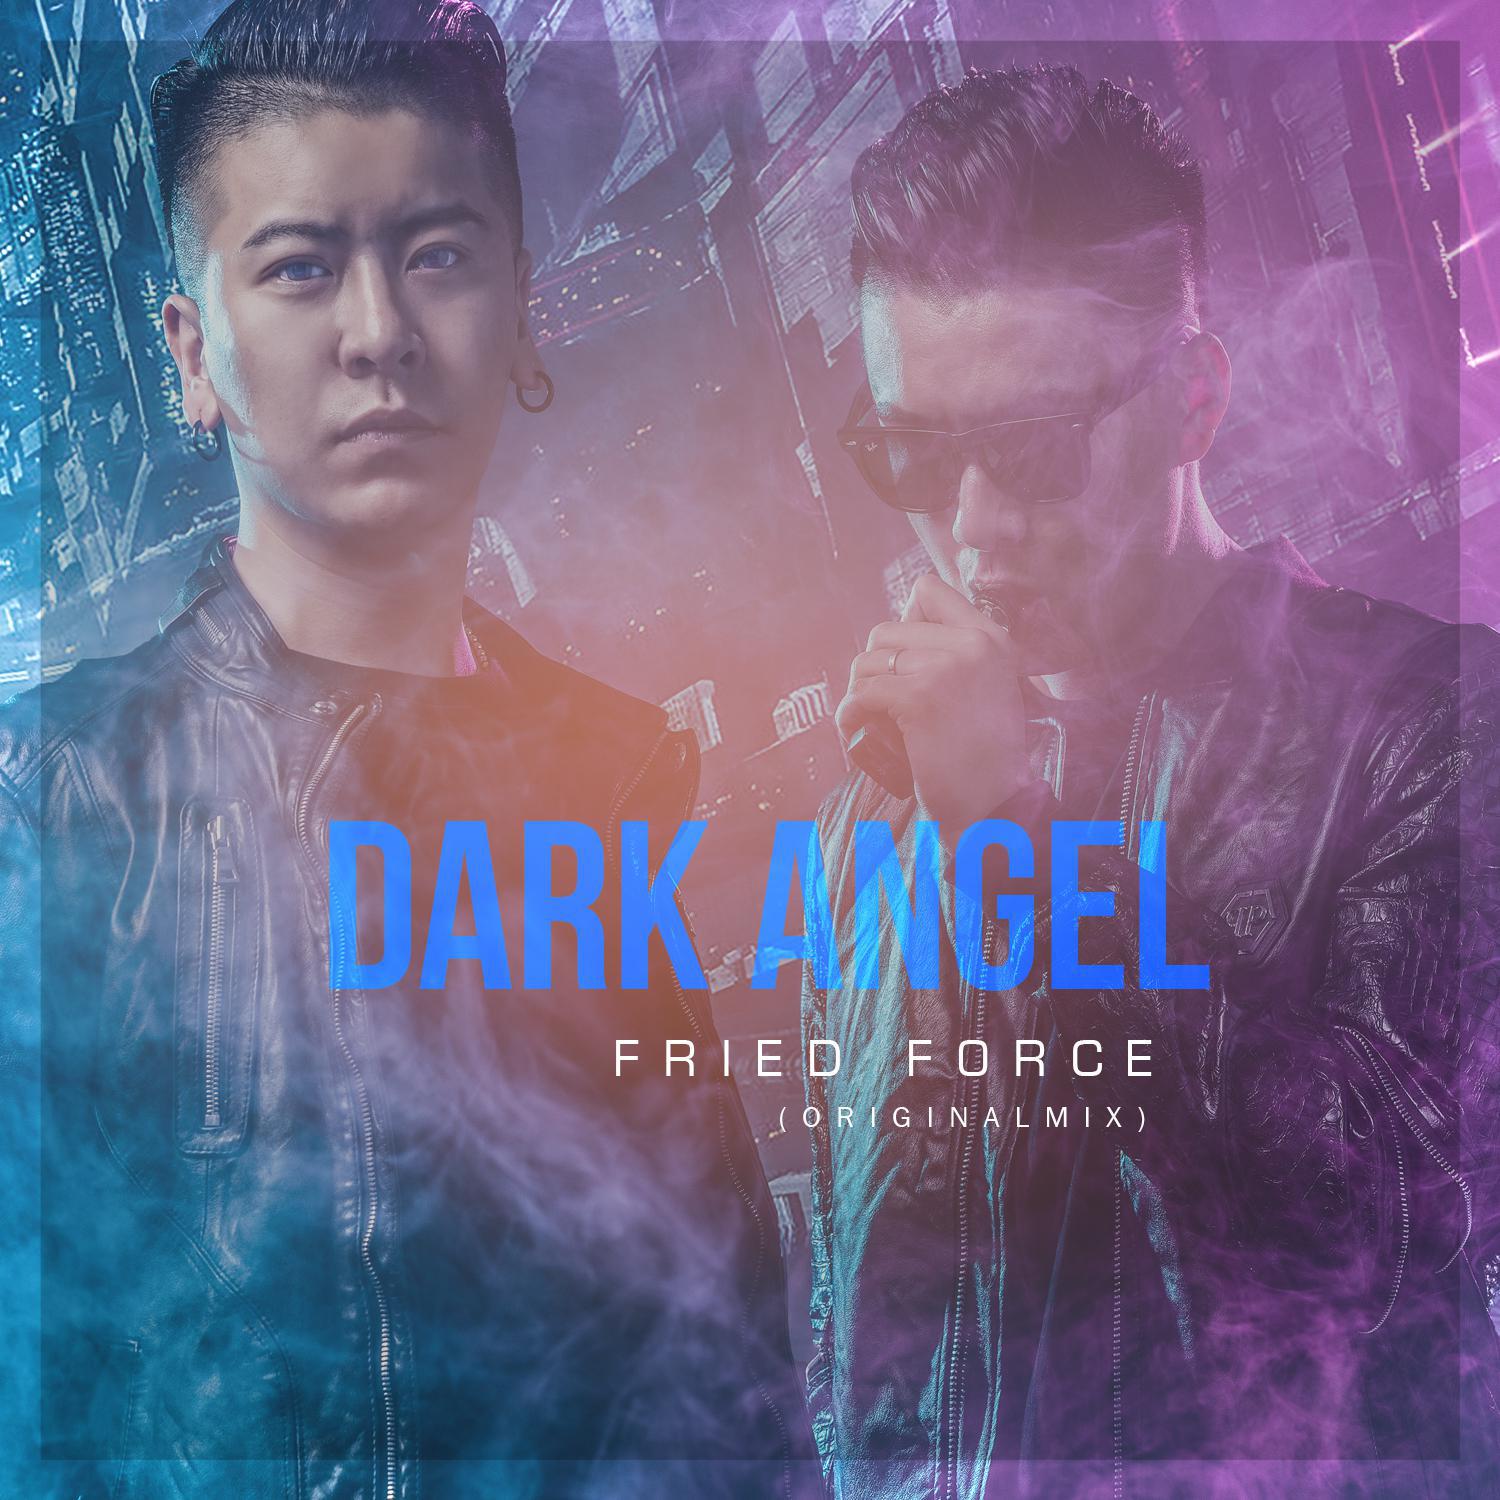 Fried Force - Dark angel(Original Mix)专辑